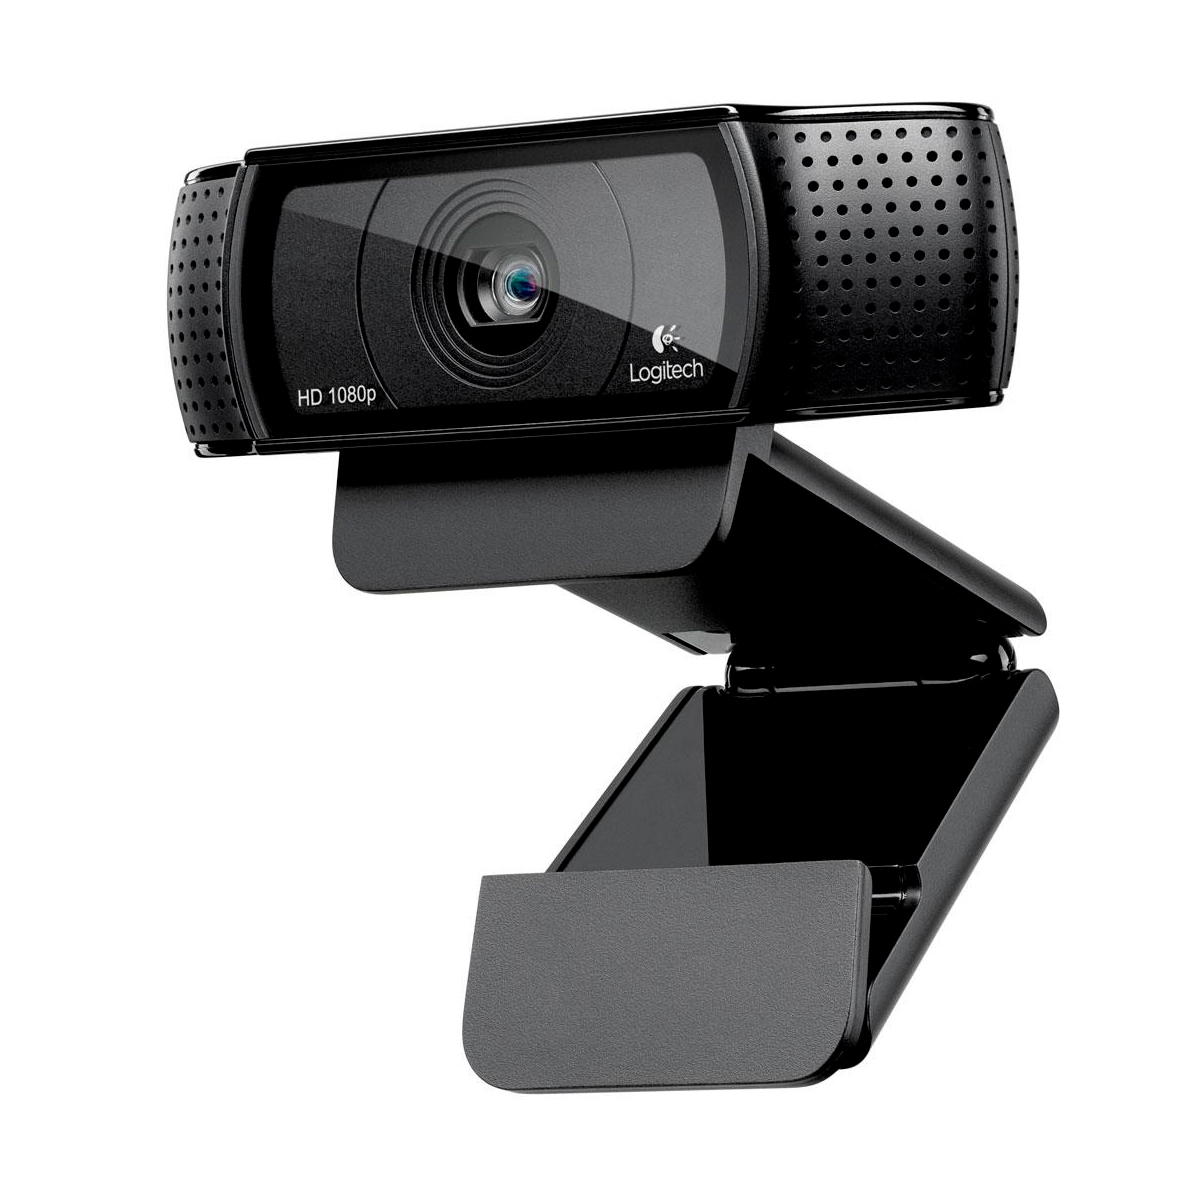 Web Câmera Logitech C920 HD Pro - 15 Megapixels - Videochamada em Full HD com áudio estéreo